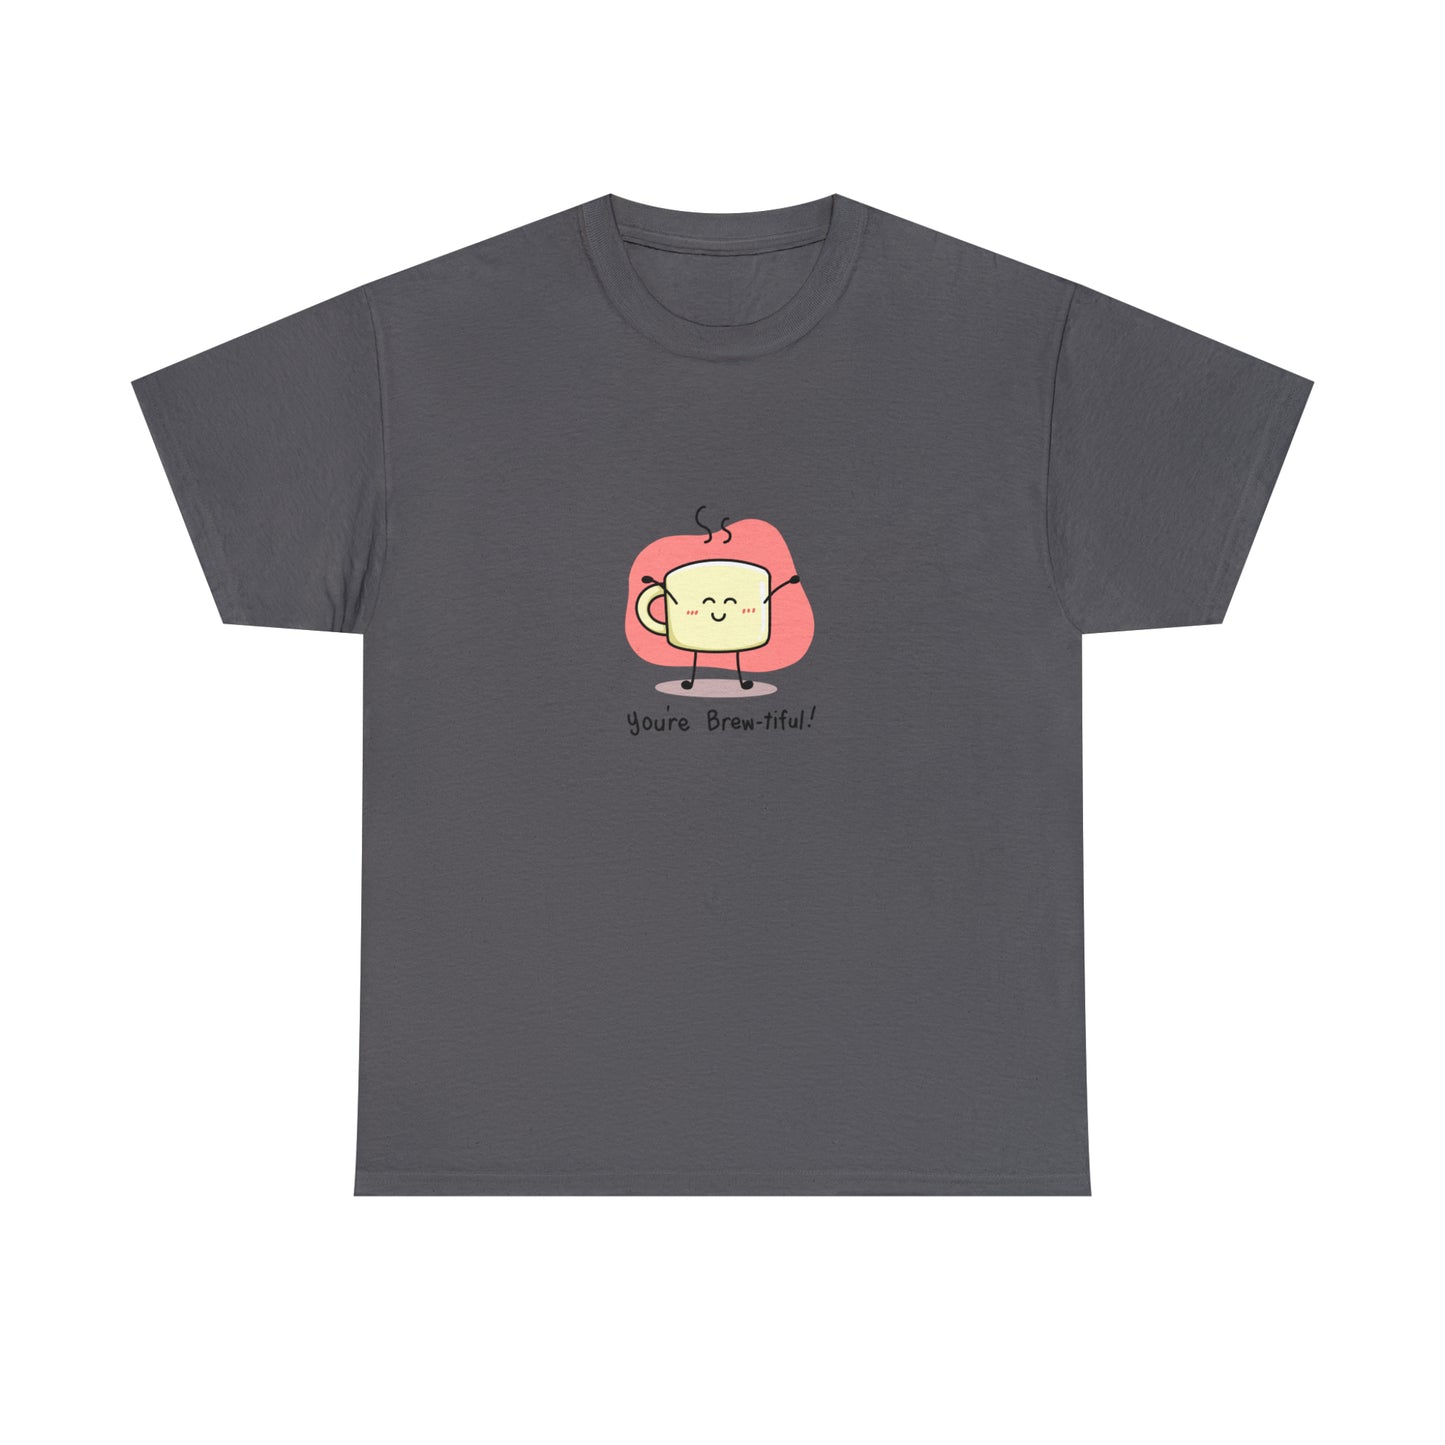 Custom Parody T-shirt, You're brewtiful design